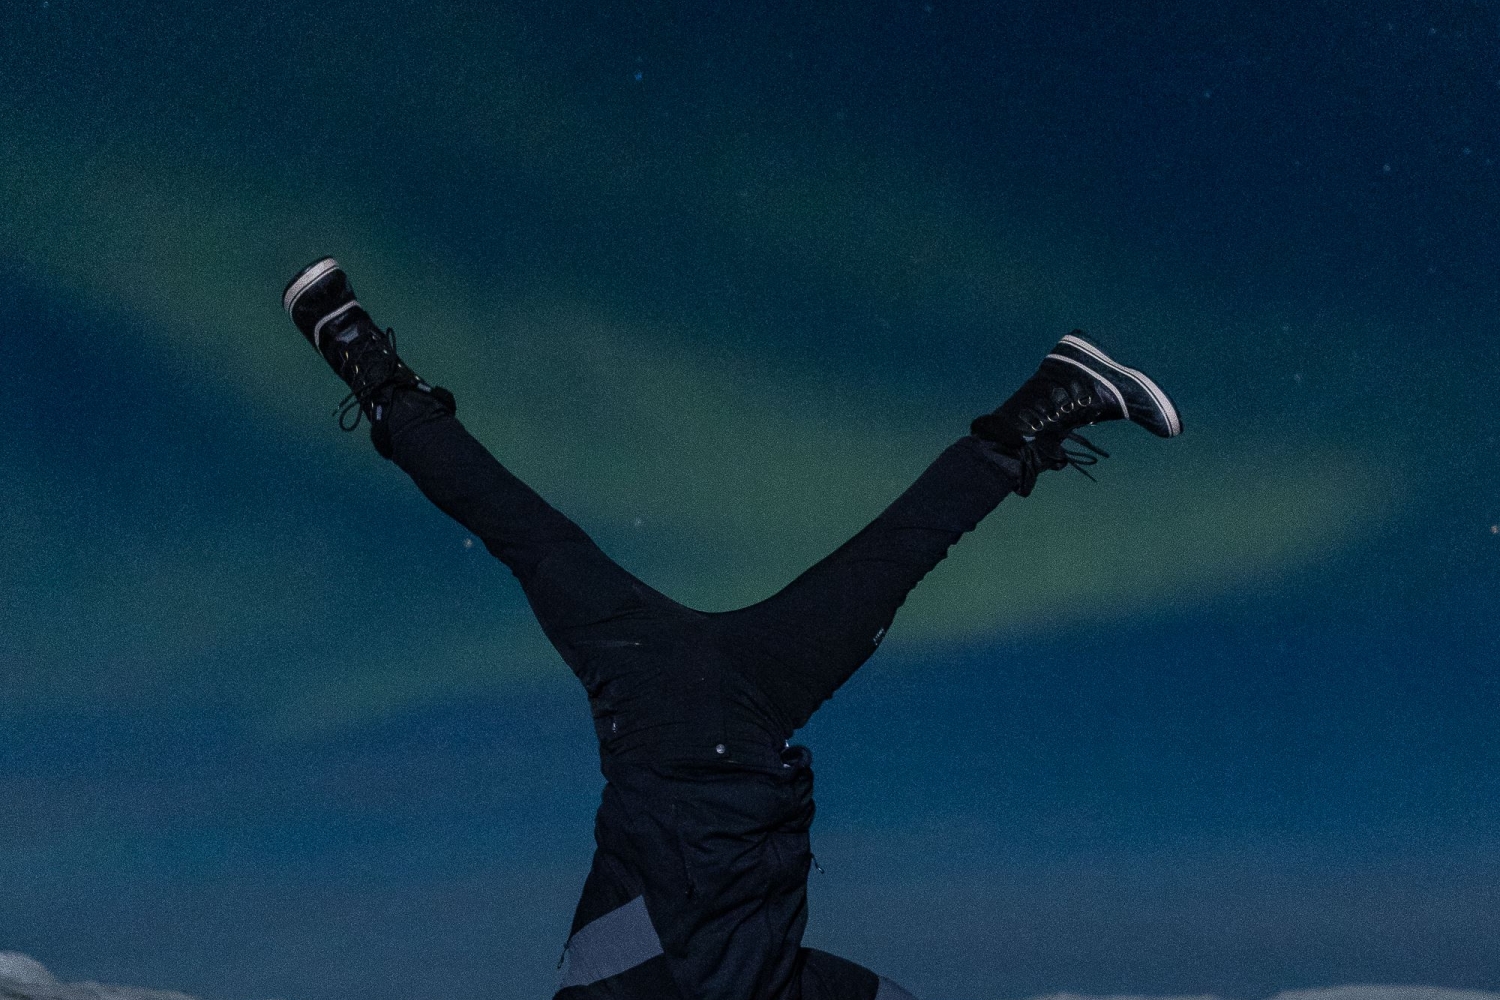 man doing somersault on the rocks under northern lights